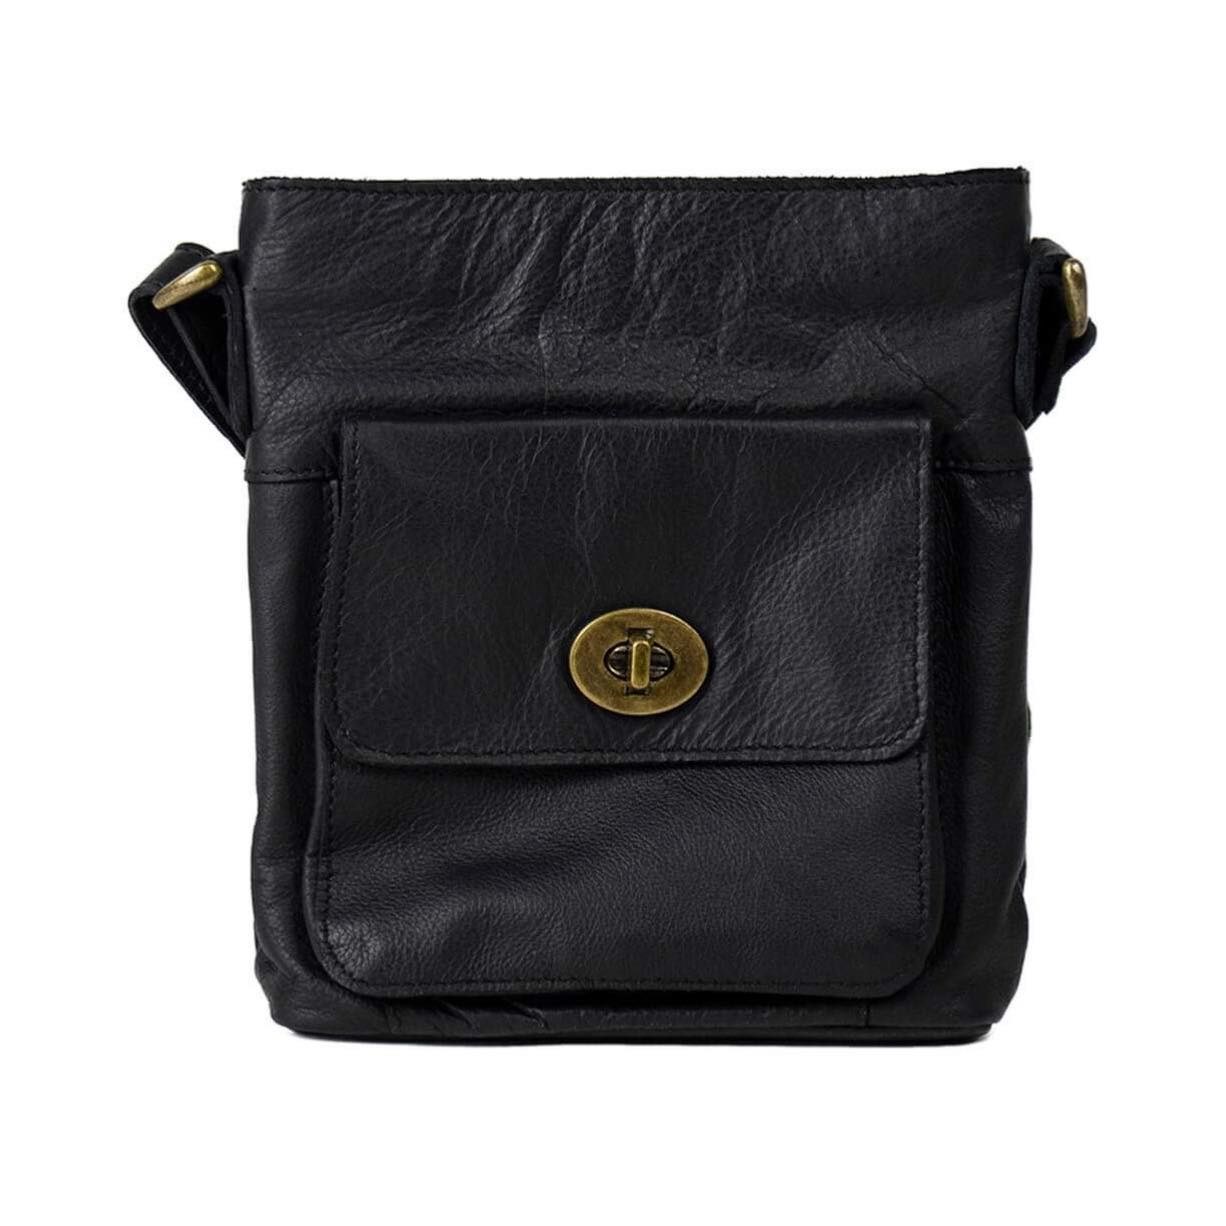 Re:Designed Dixie - Small Urban Bag